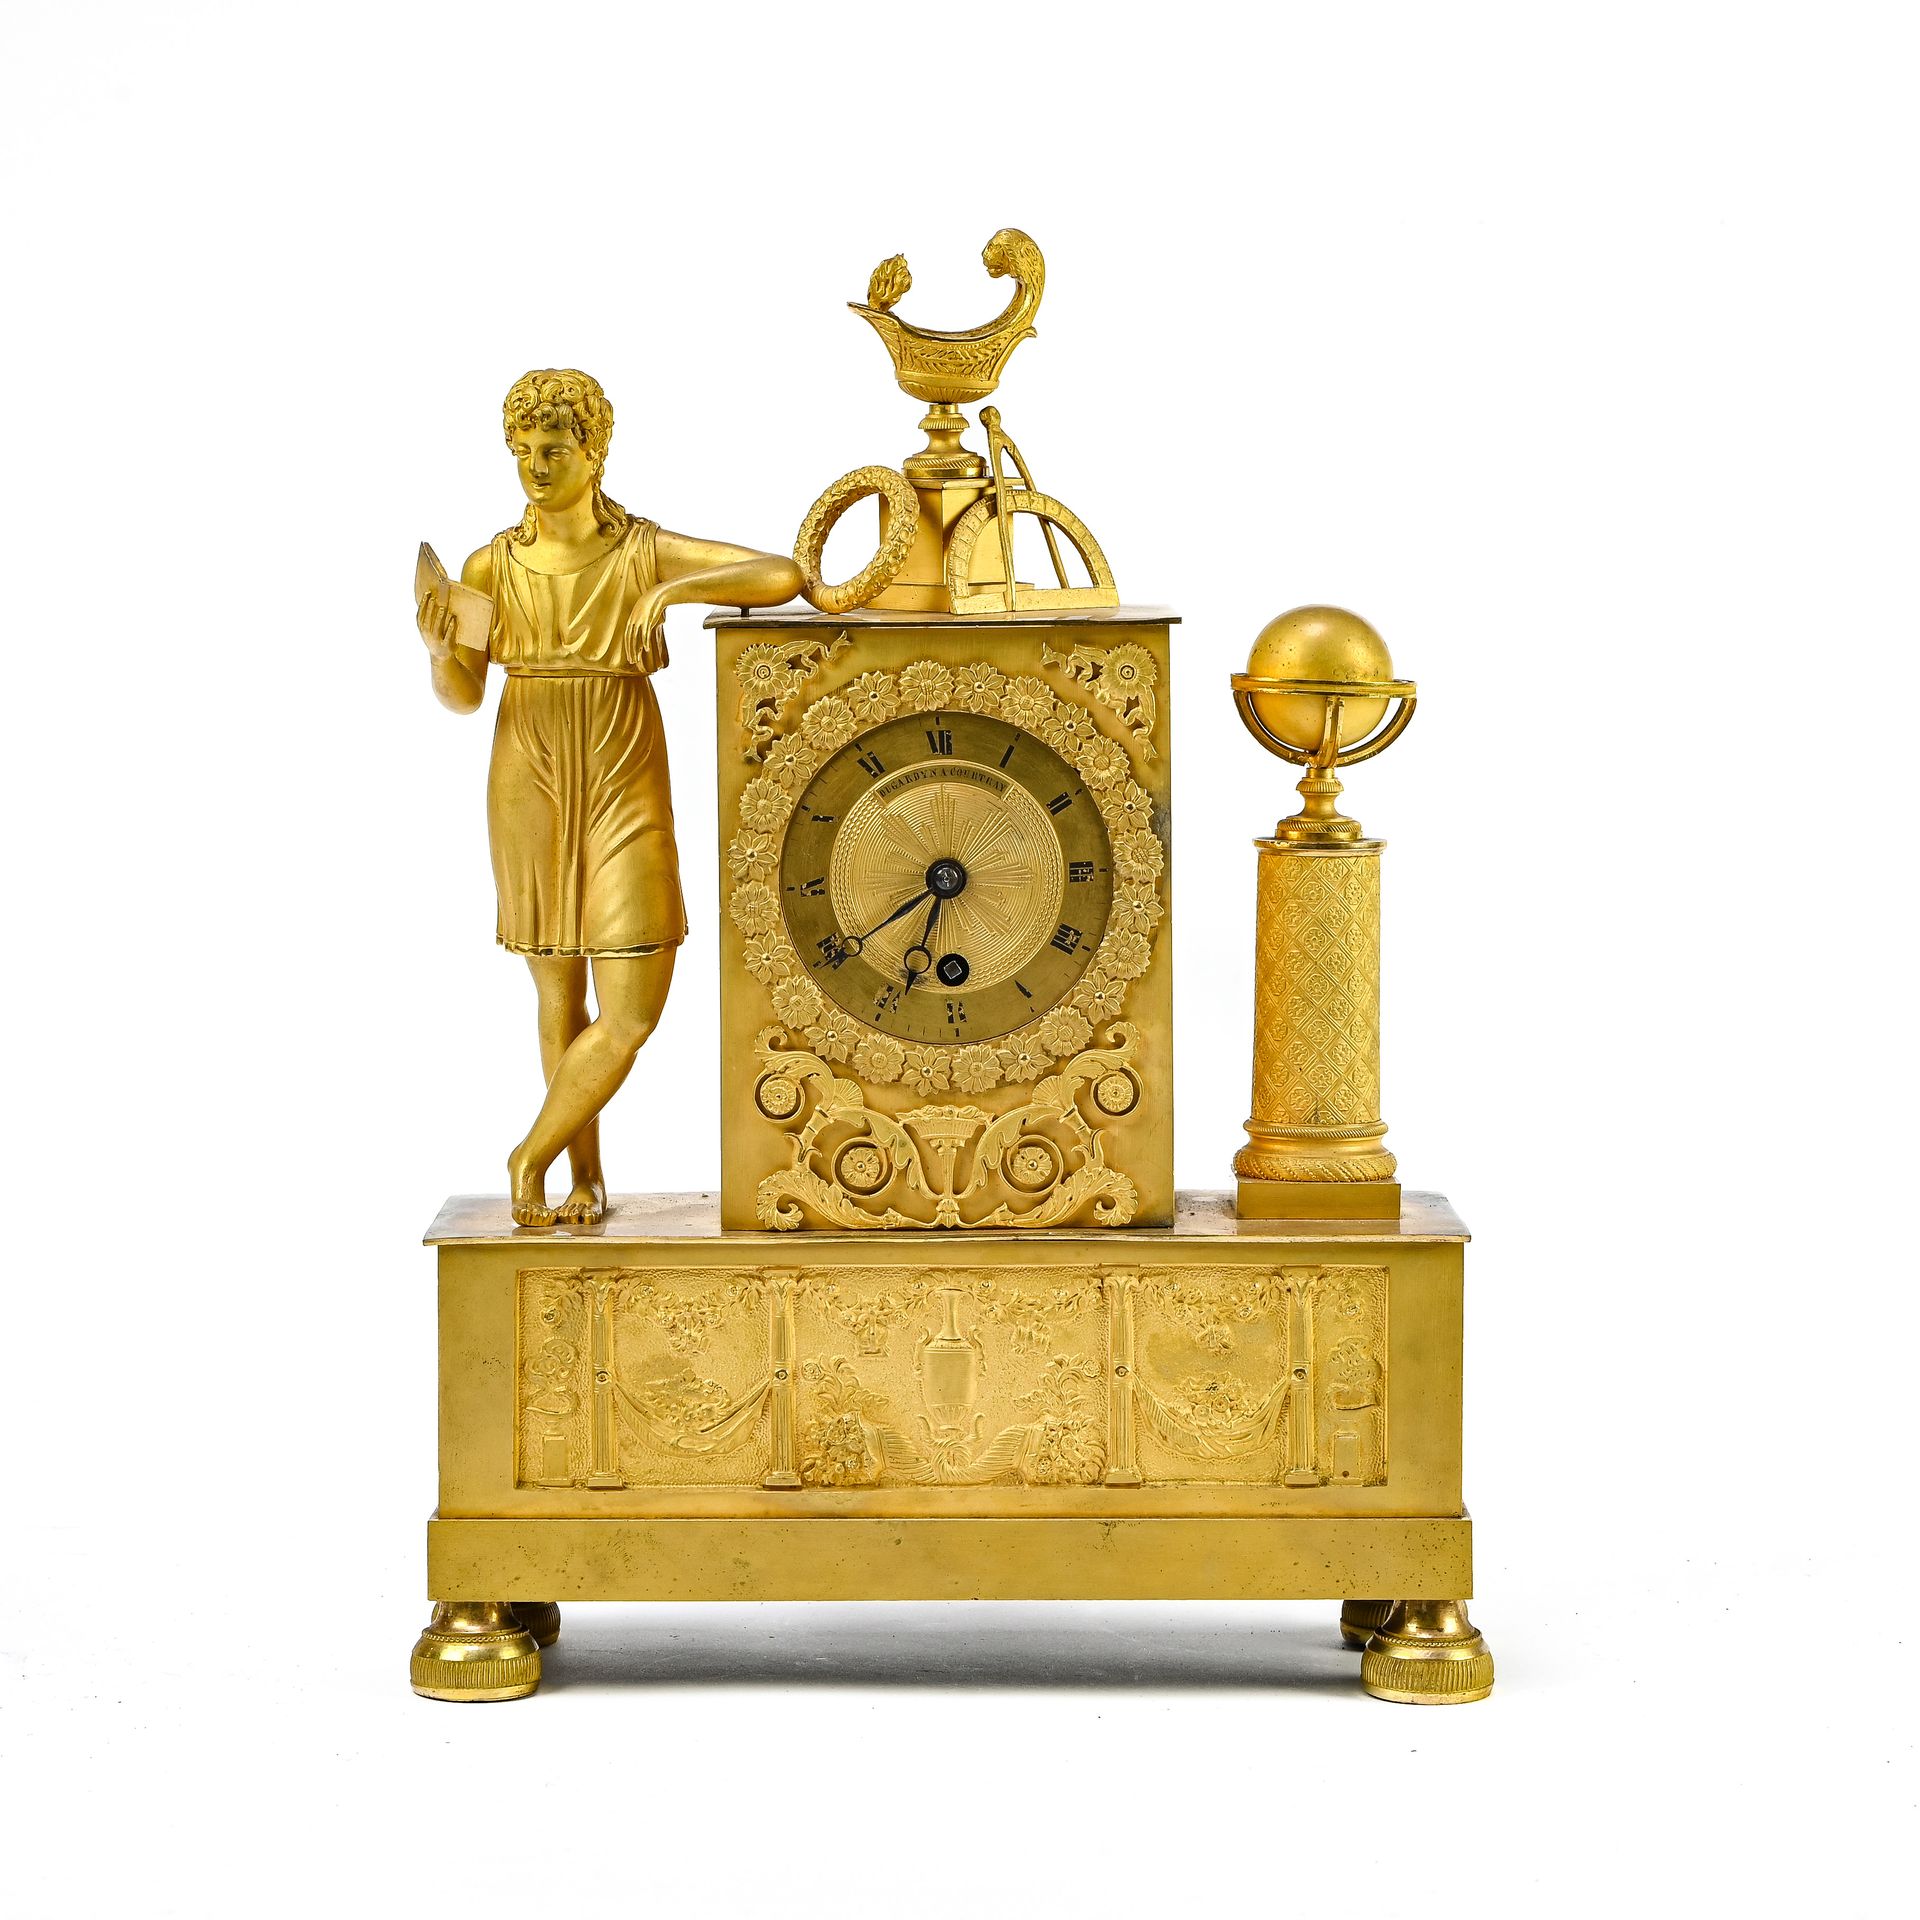 Pendule l'étude des sciences 19世纪的作品

科学研究的时钟



鎏金铜制，表盘上有 "Dugardyn à Courtray &hellip;